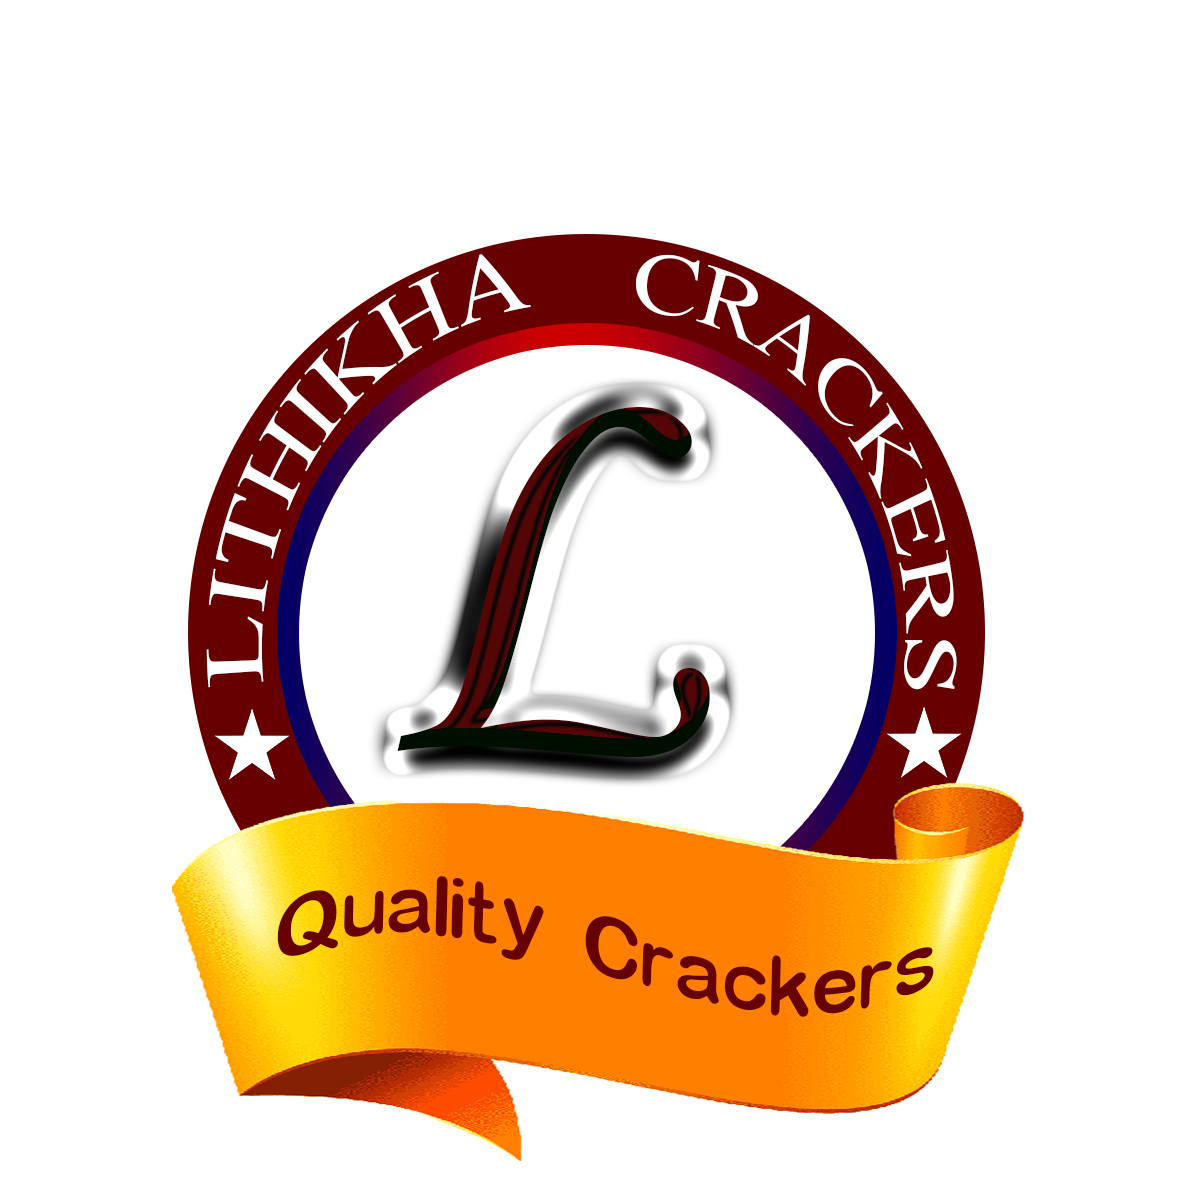 Lithika Crackers